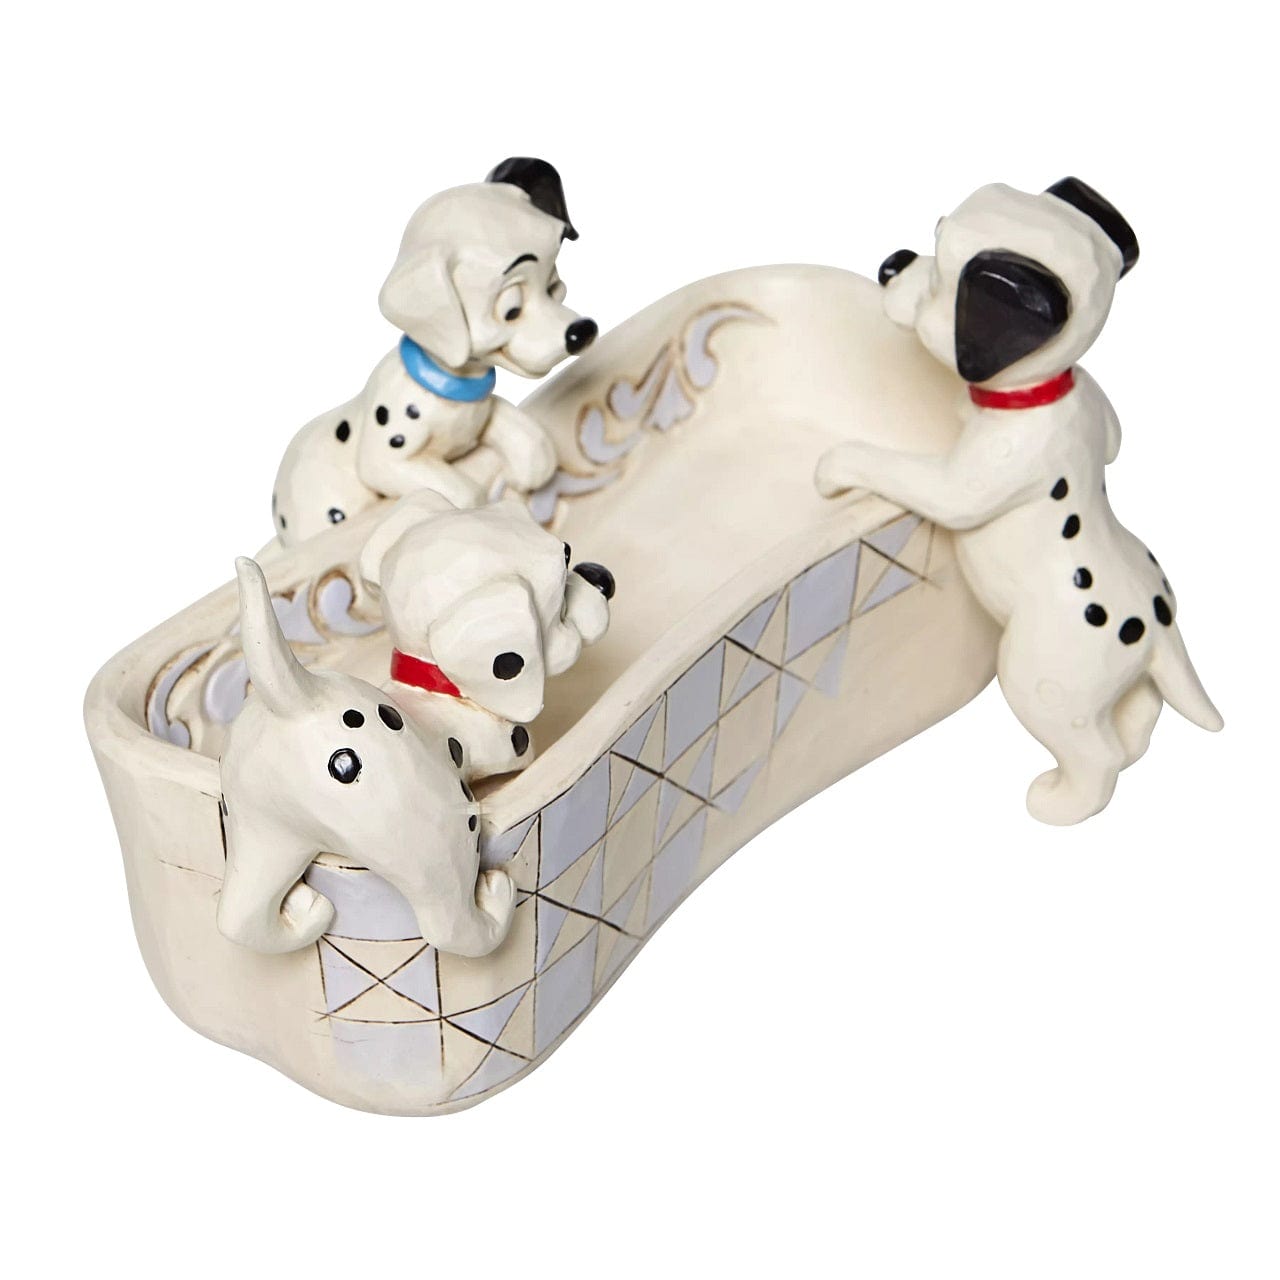 Enesco Disney Ornament Disney Traditions Figurine - Puppy Bowl